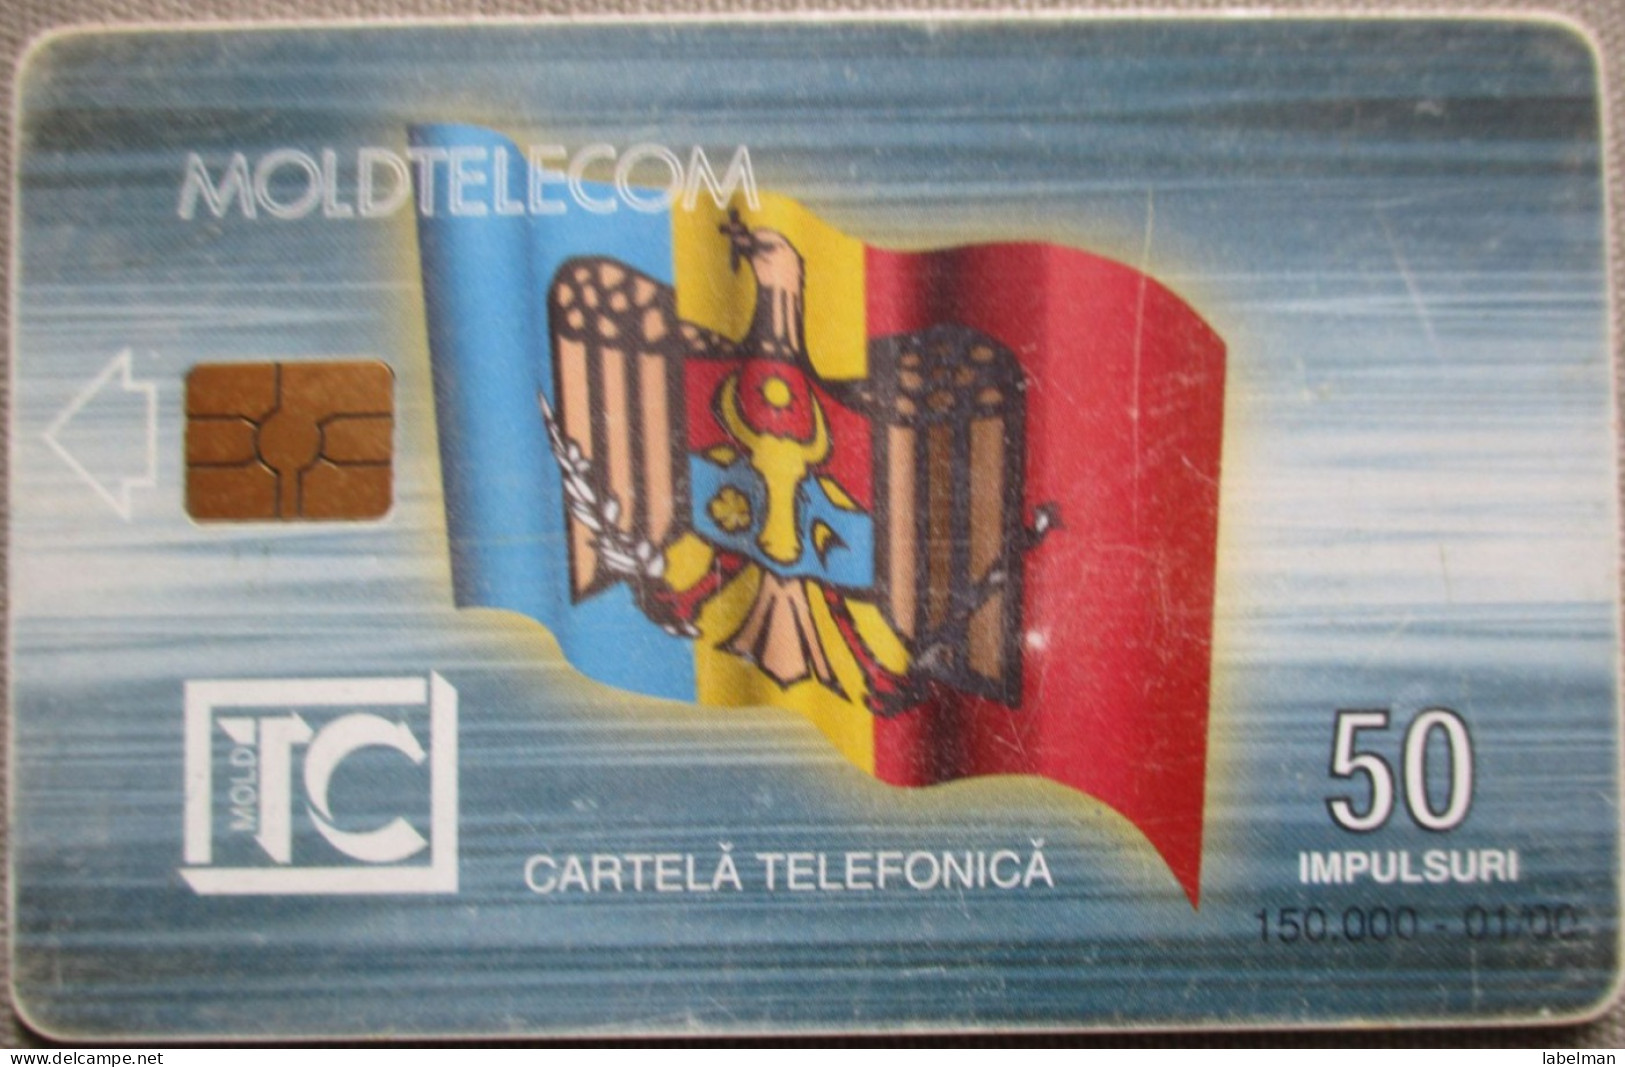 MOLDOVA MOLDTELECOM TELEPHONE PHONE TELEFONWERTKARTE PHONECARD CARTELA CARD CARTE KARTE COLLECTOR BEZEQ 50 UNITS - Moldavie